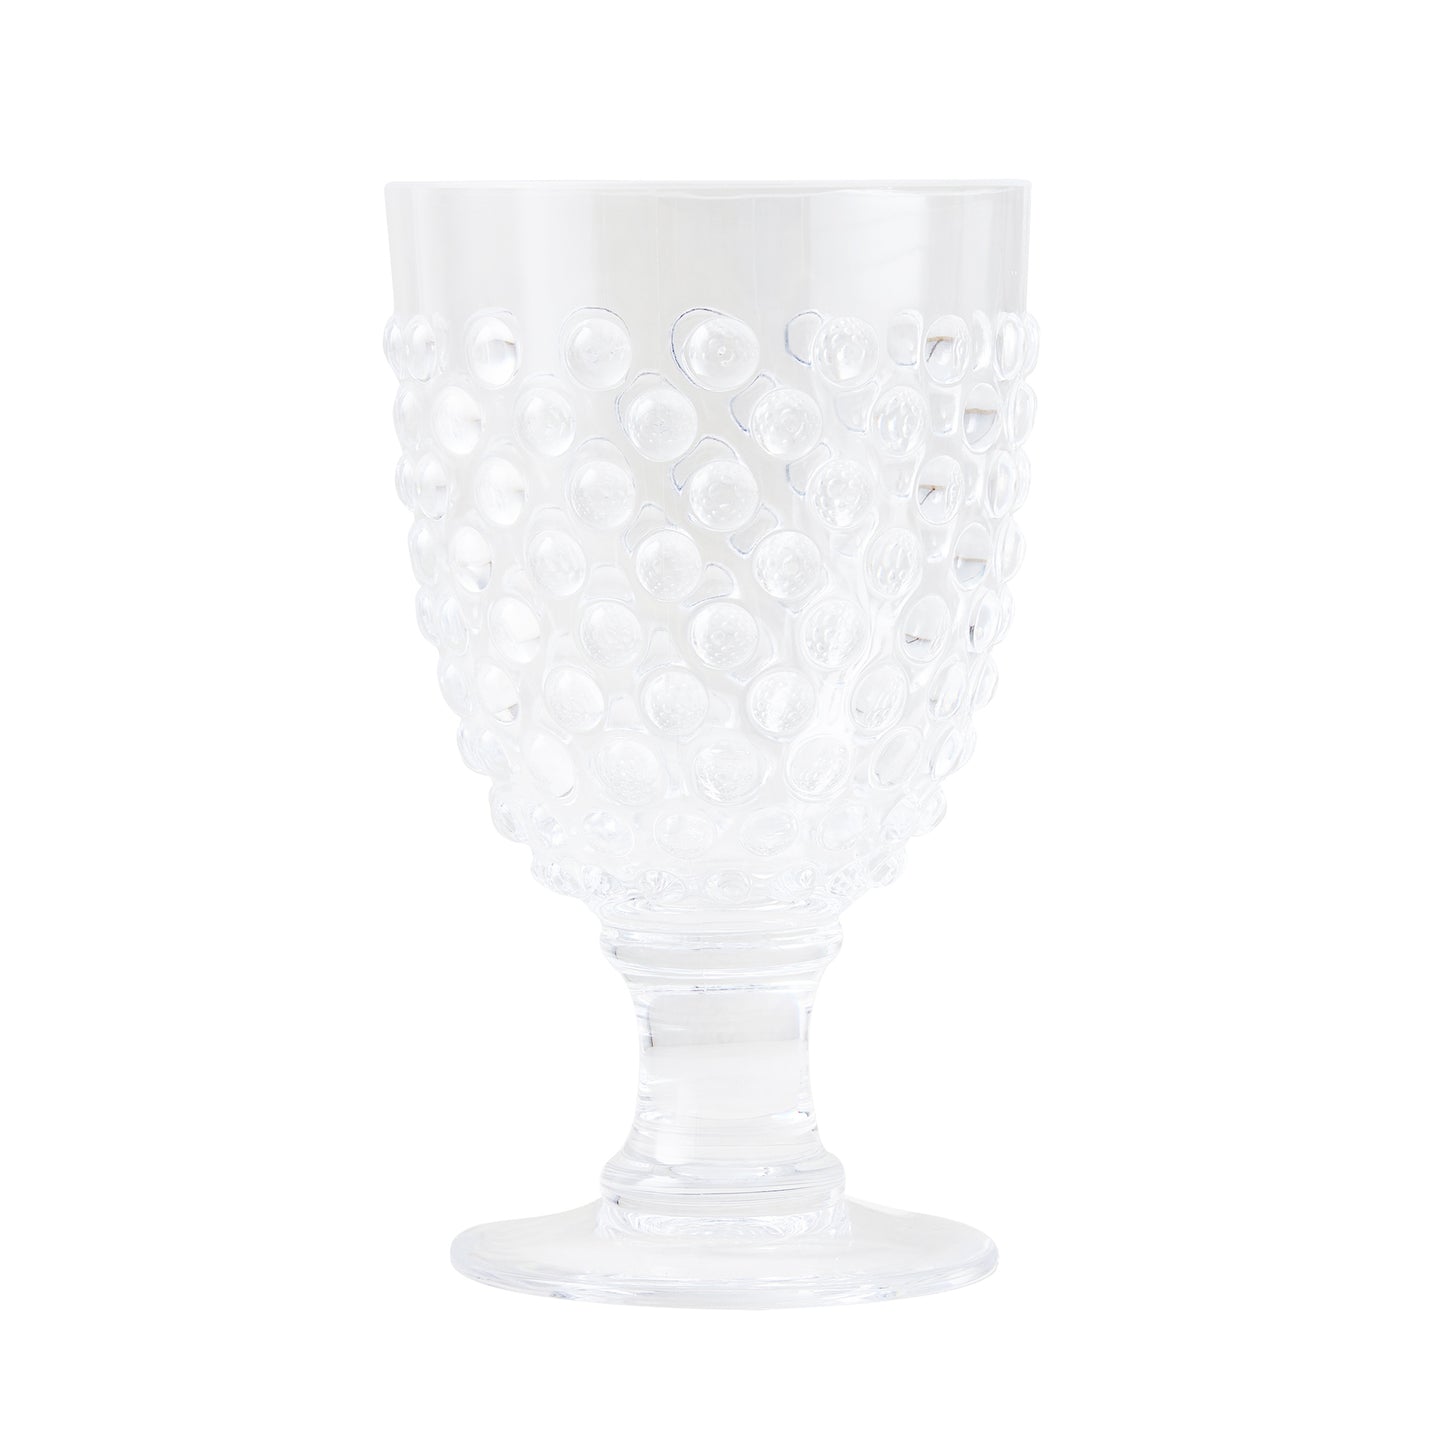 Acrylic Bubble Wine Glass